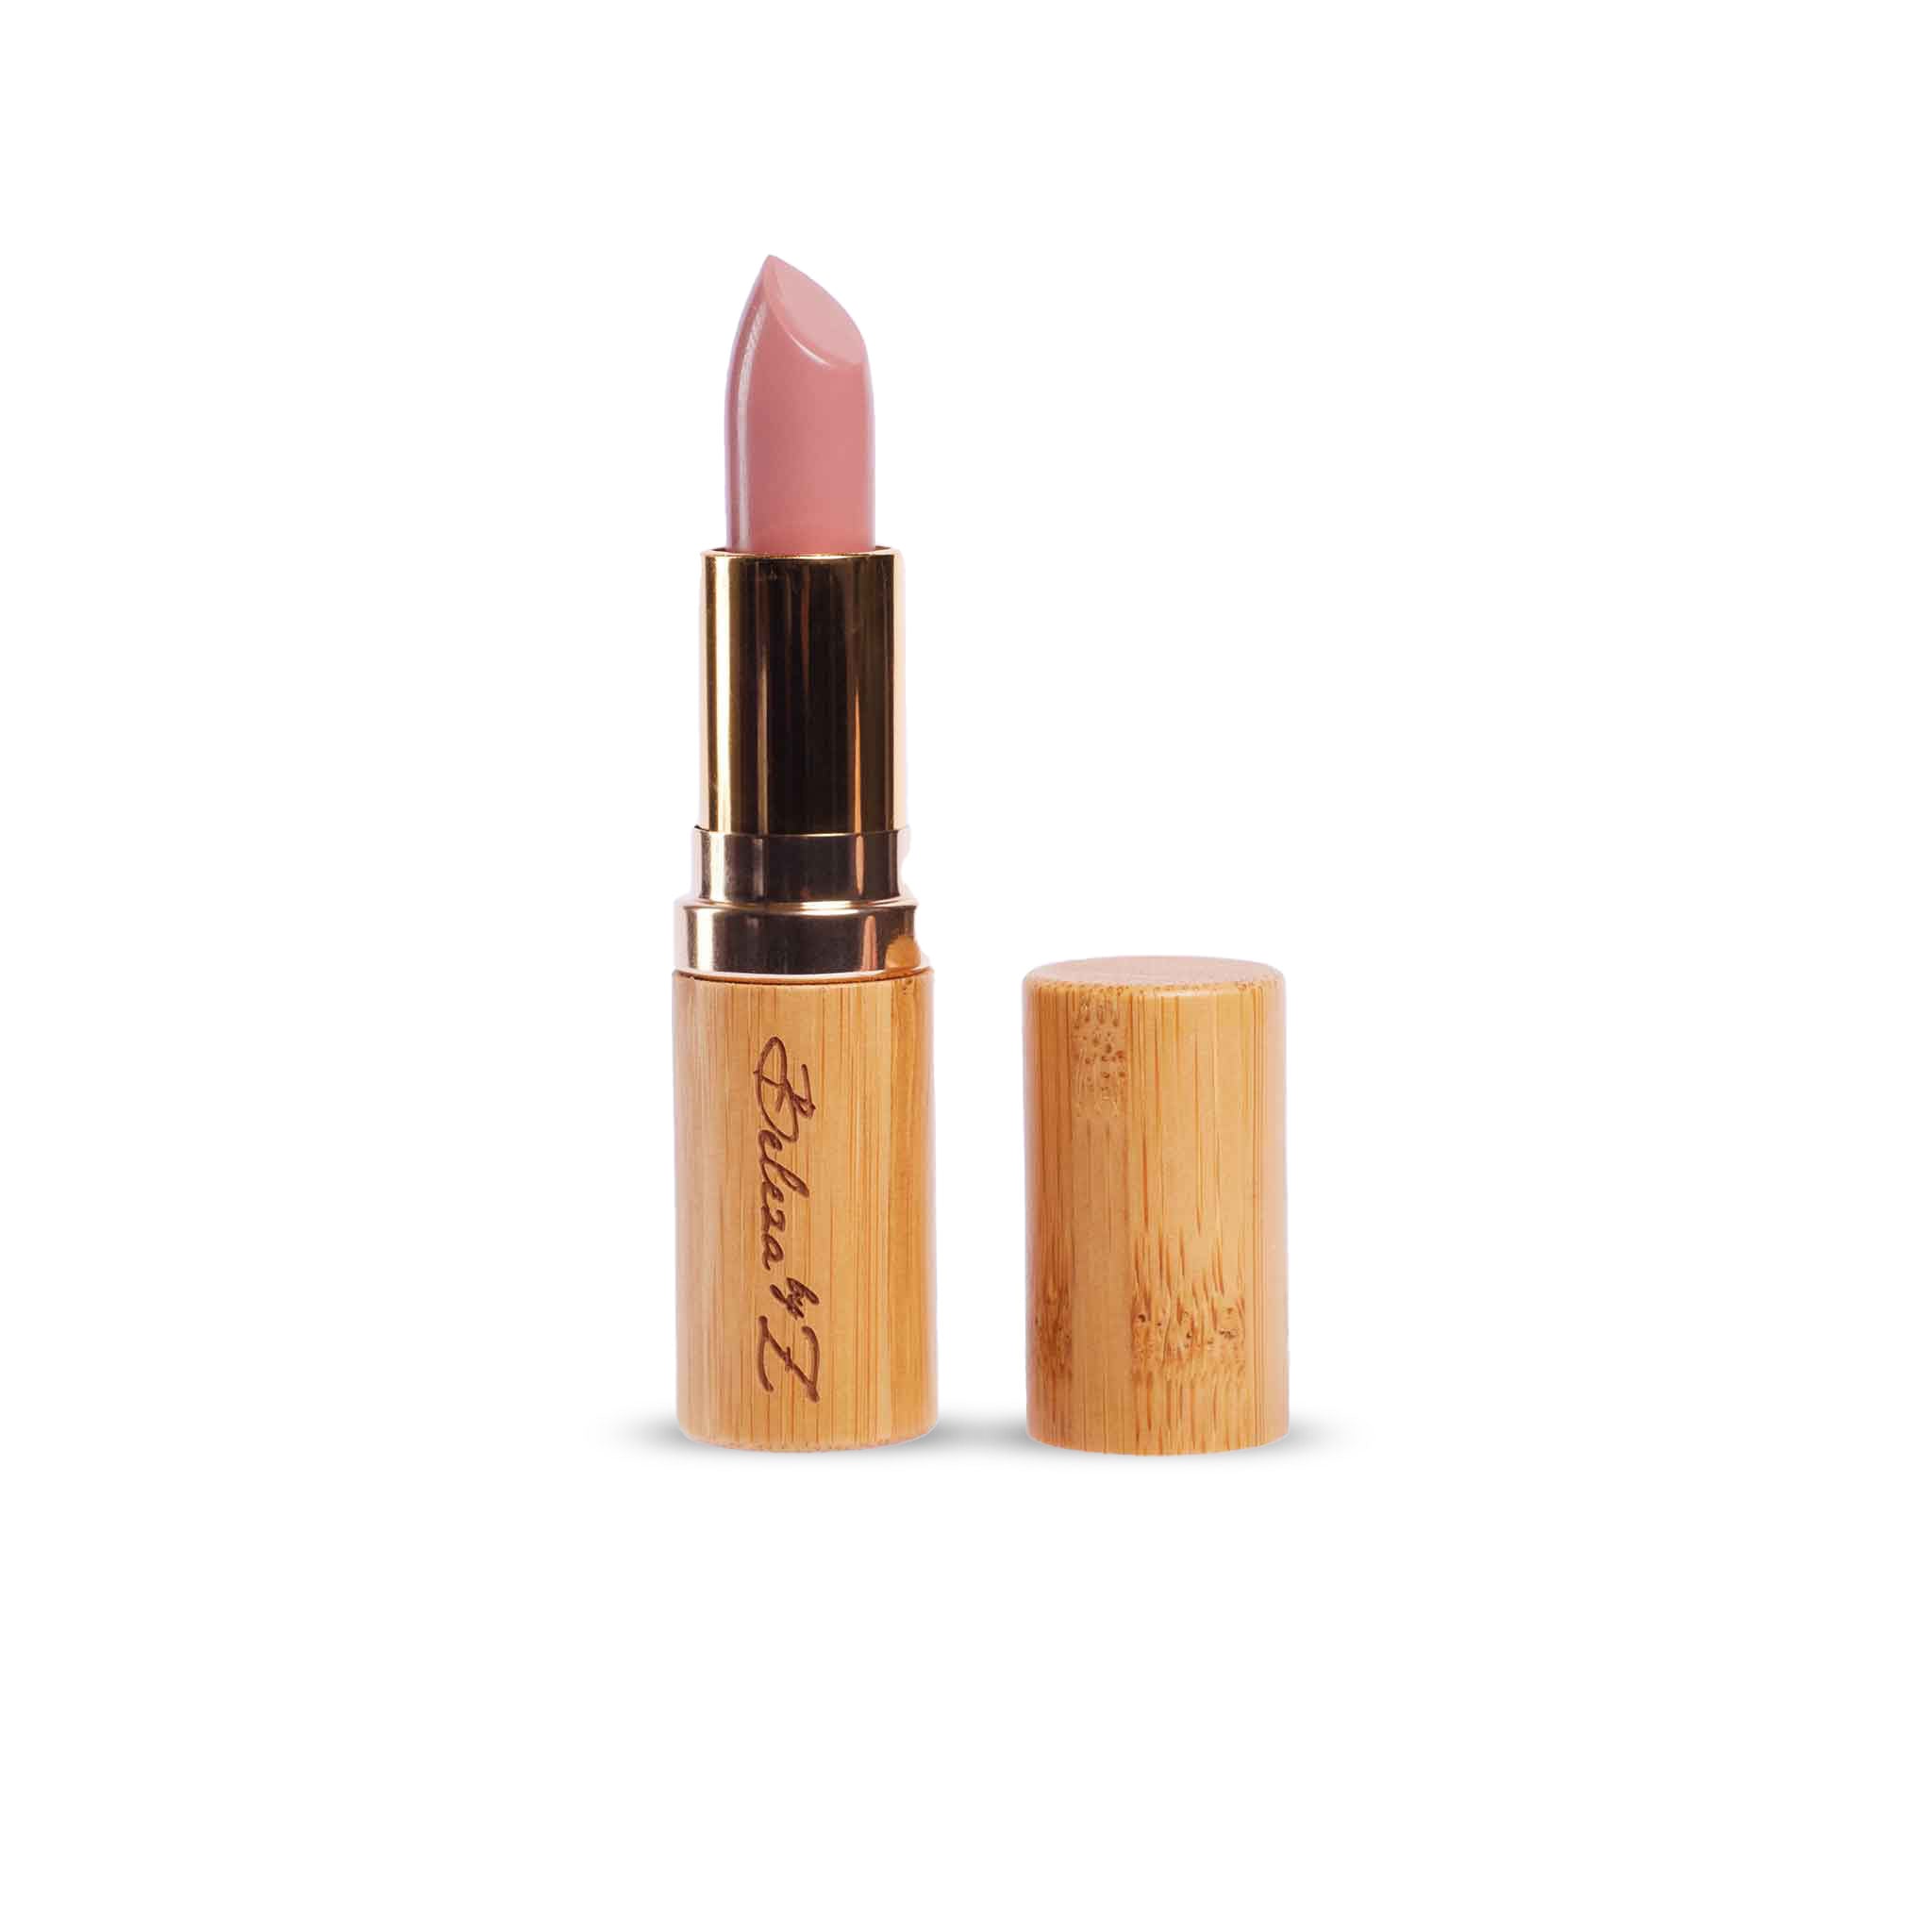 Ultra-creamy moisturizing lipstick in color Charming